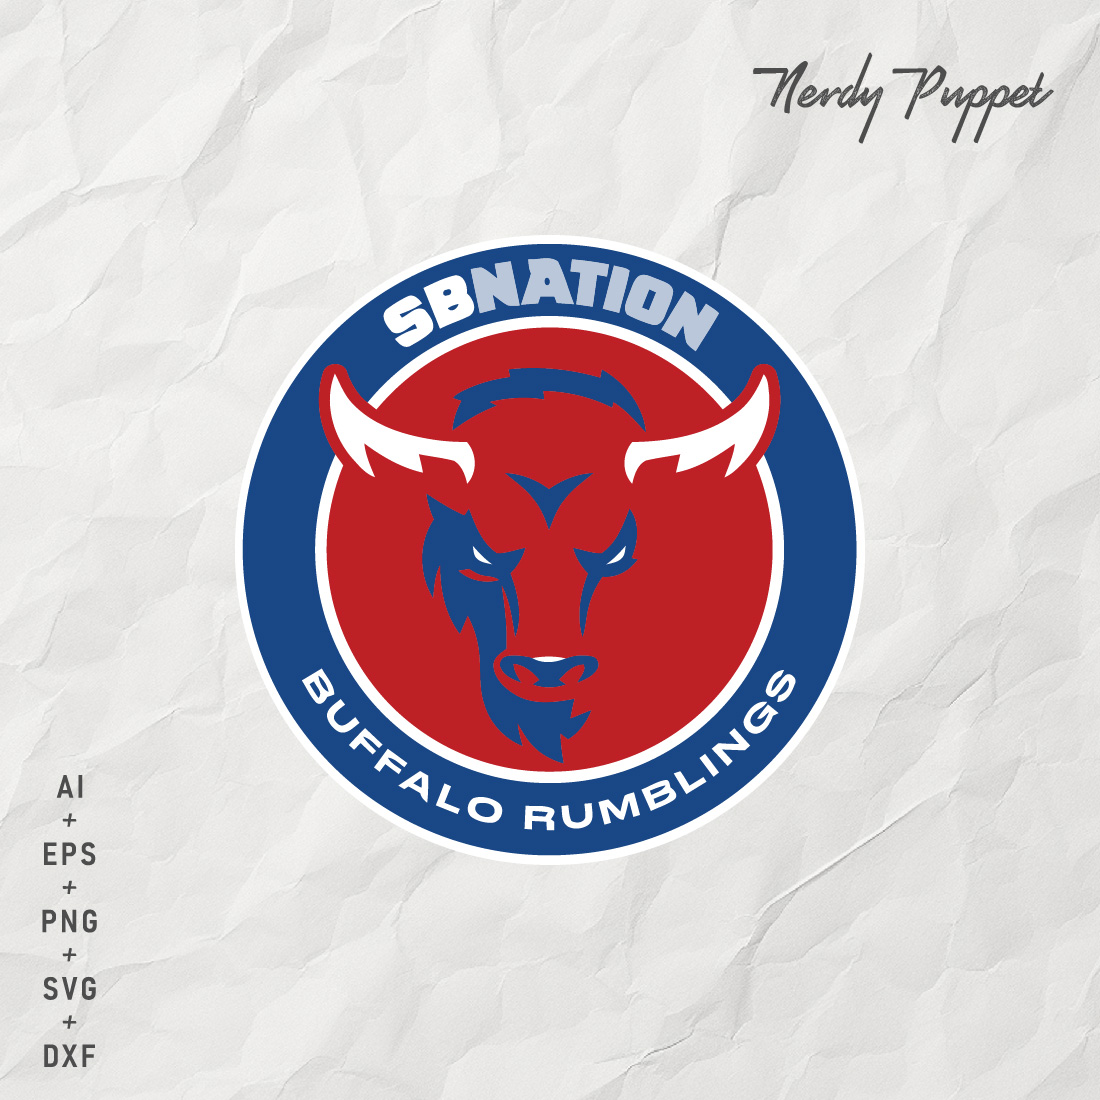 Buffalo Bills cover image.